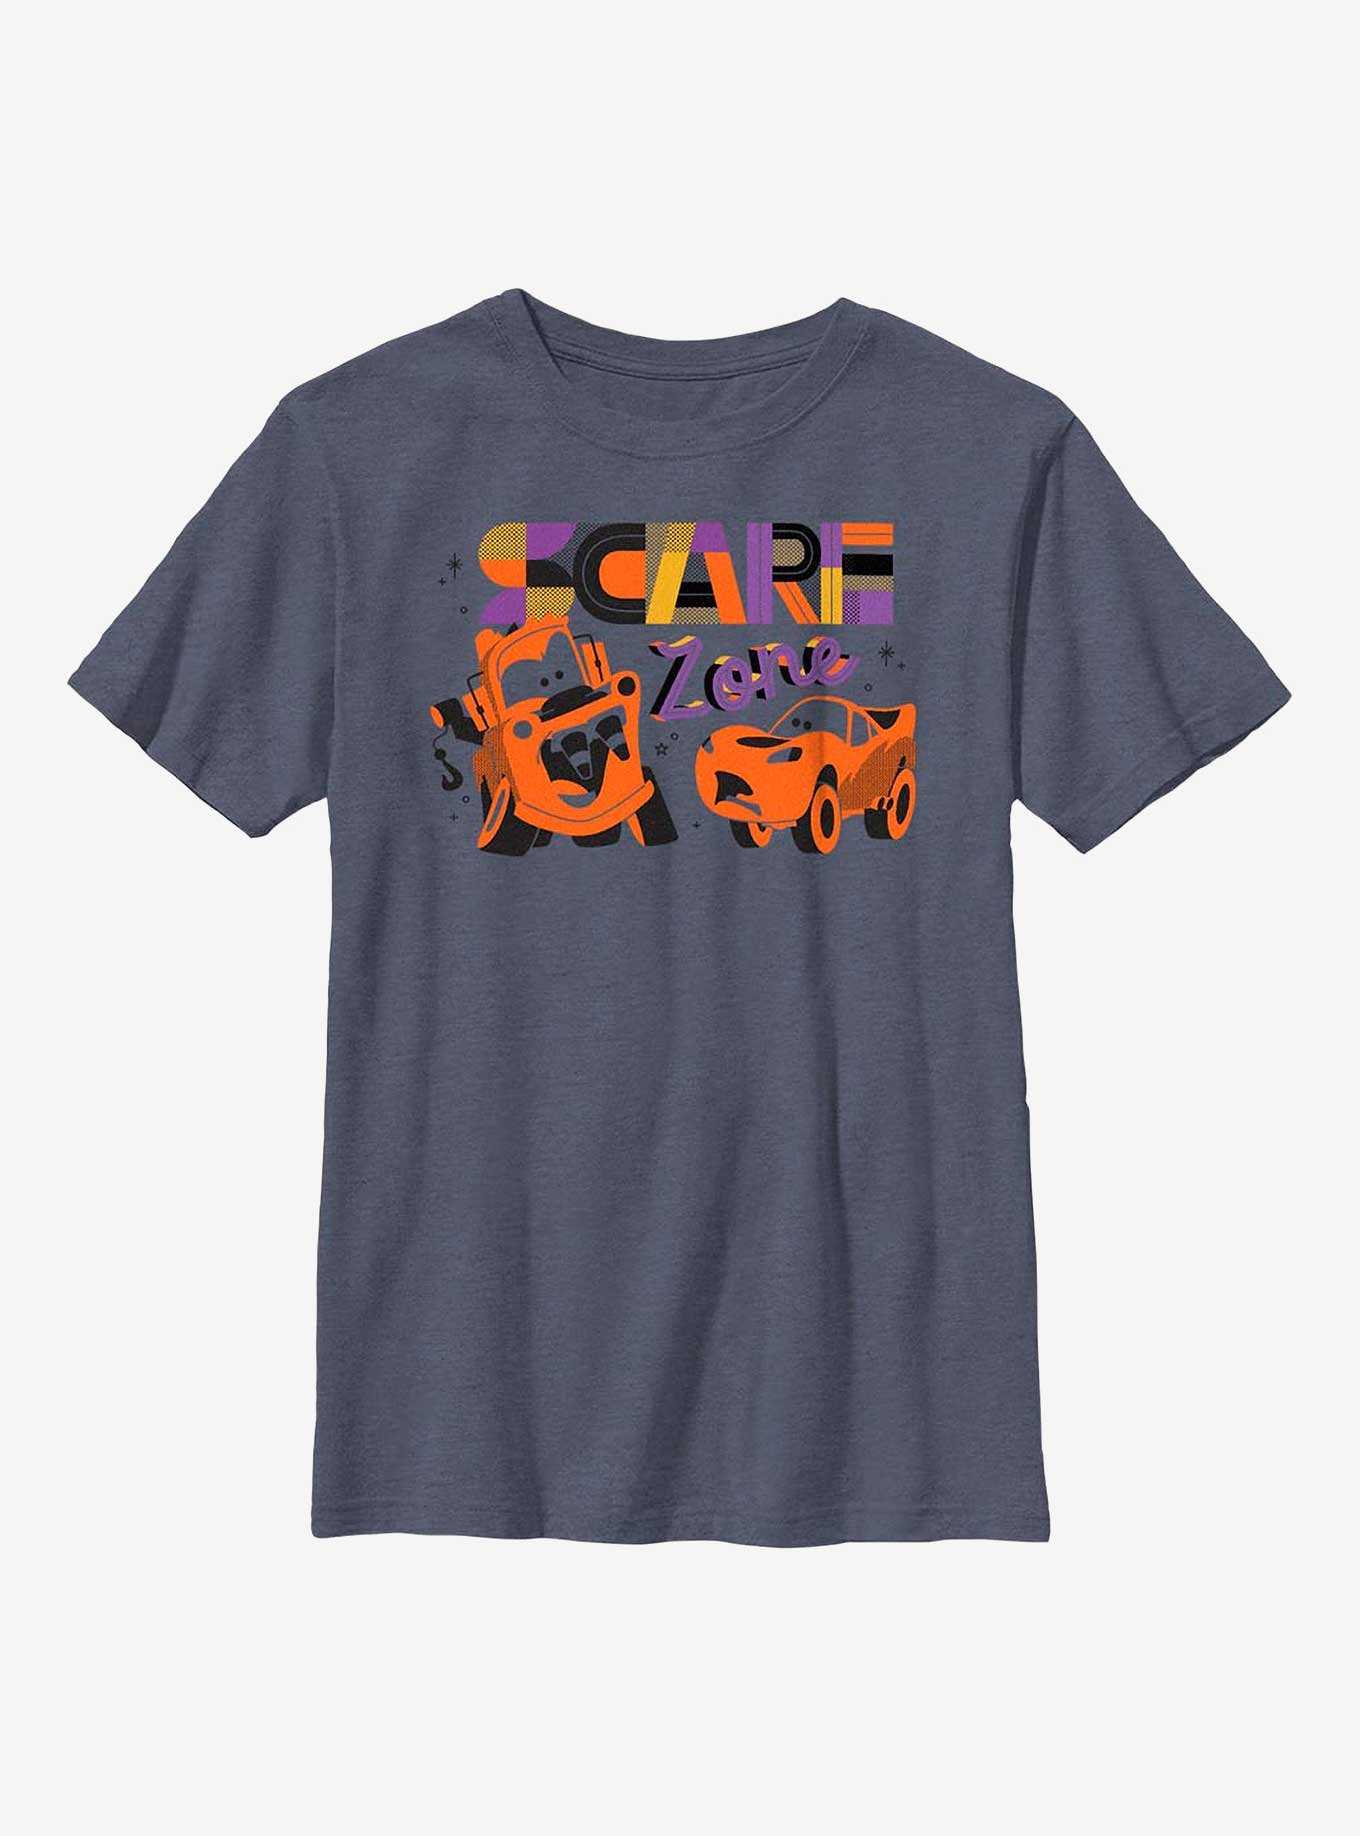 Disney Pixar Cars Scare Zone Youth T-Shirt, , hi-res